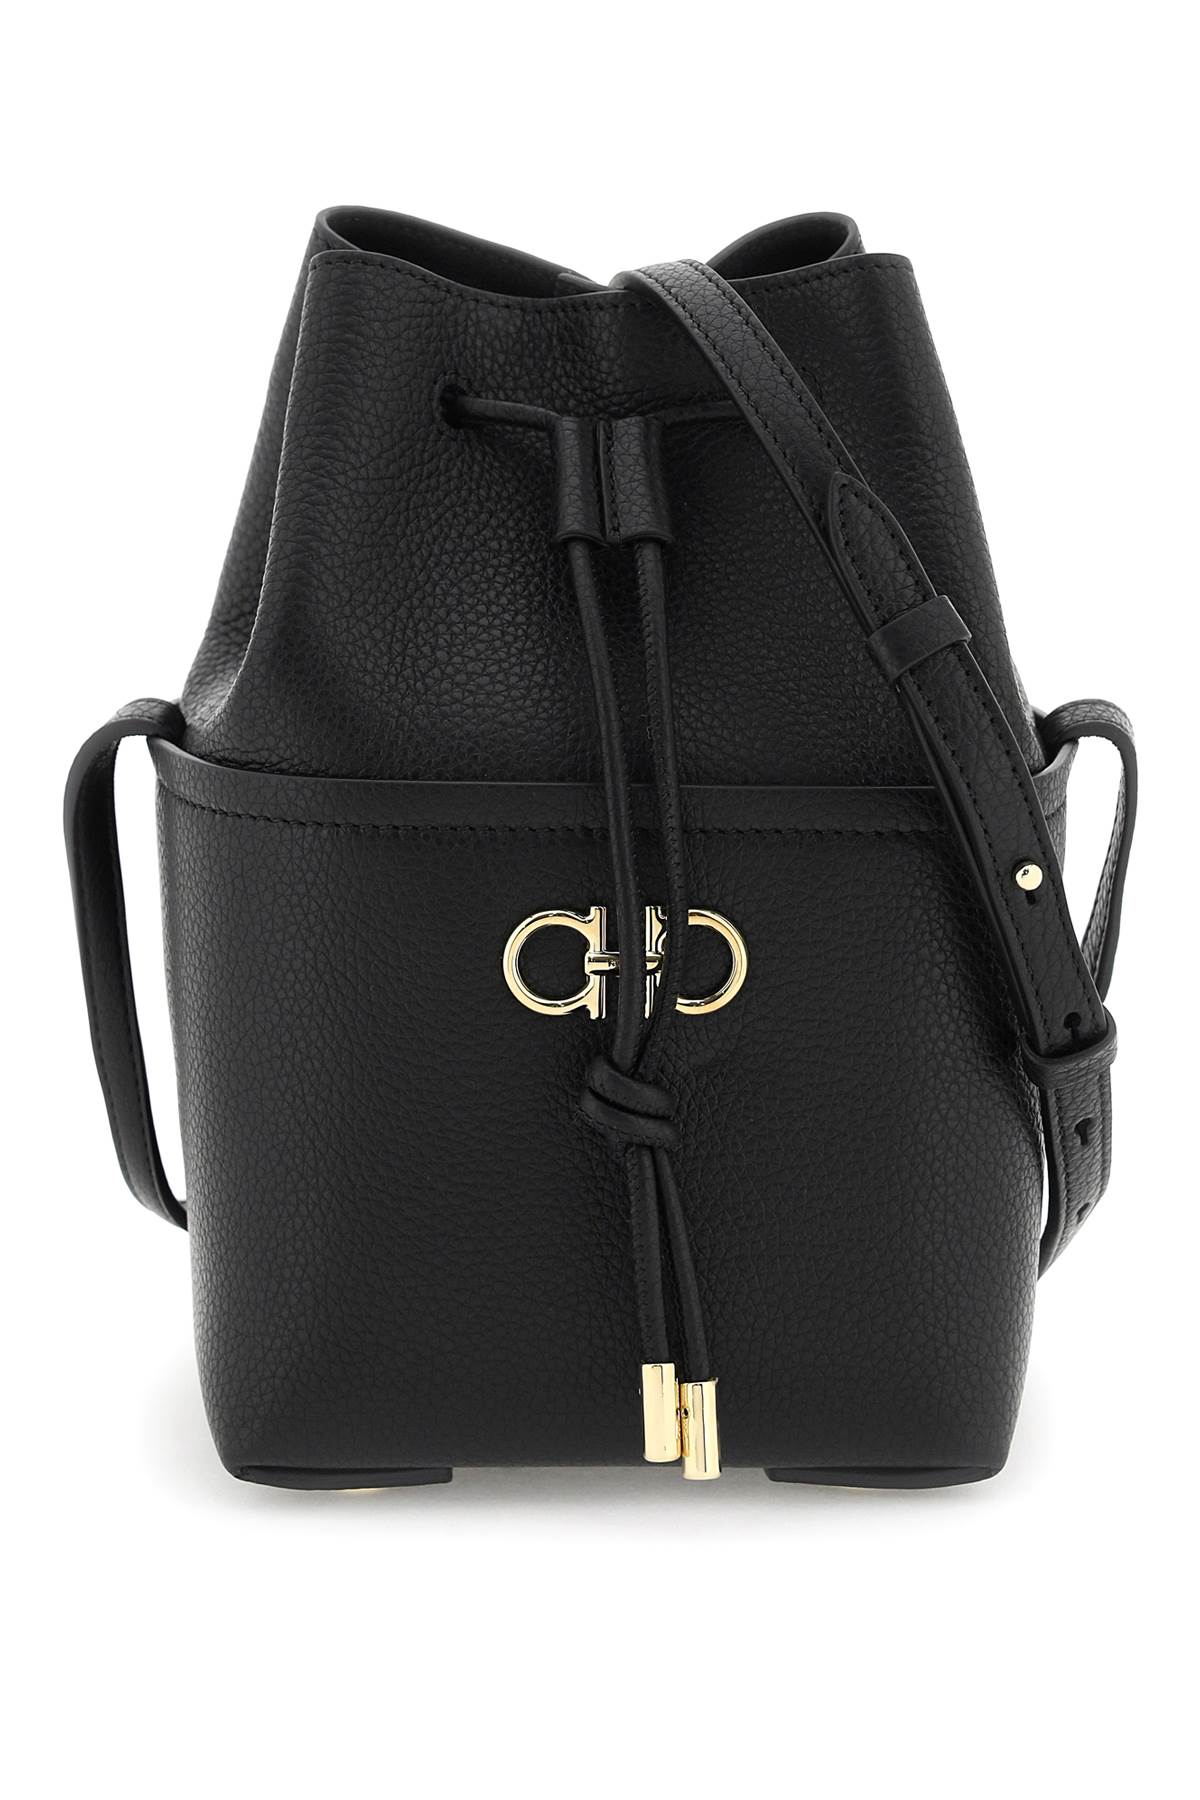 Gancini Hook Bucket Handbag by Ferragamo for Women - Black Mini Bucket Style